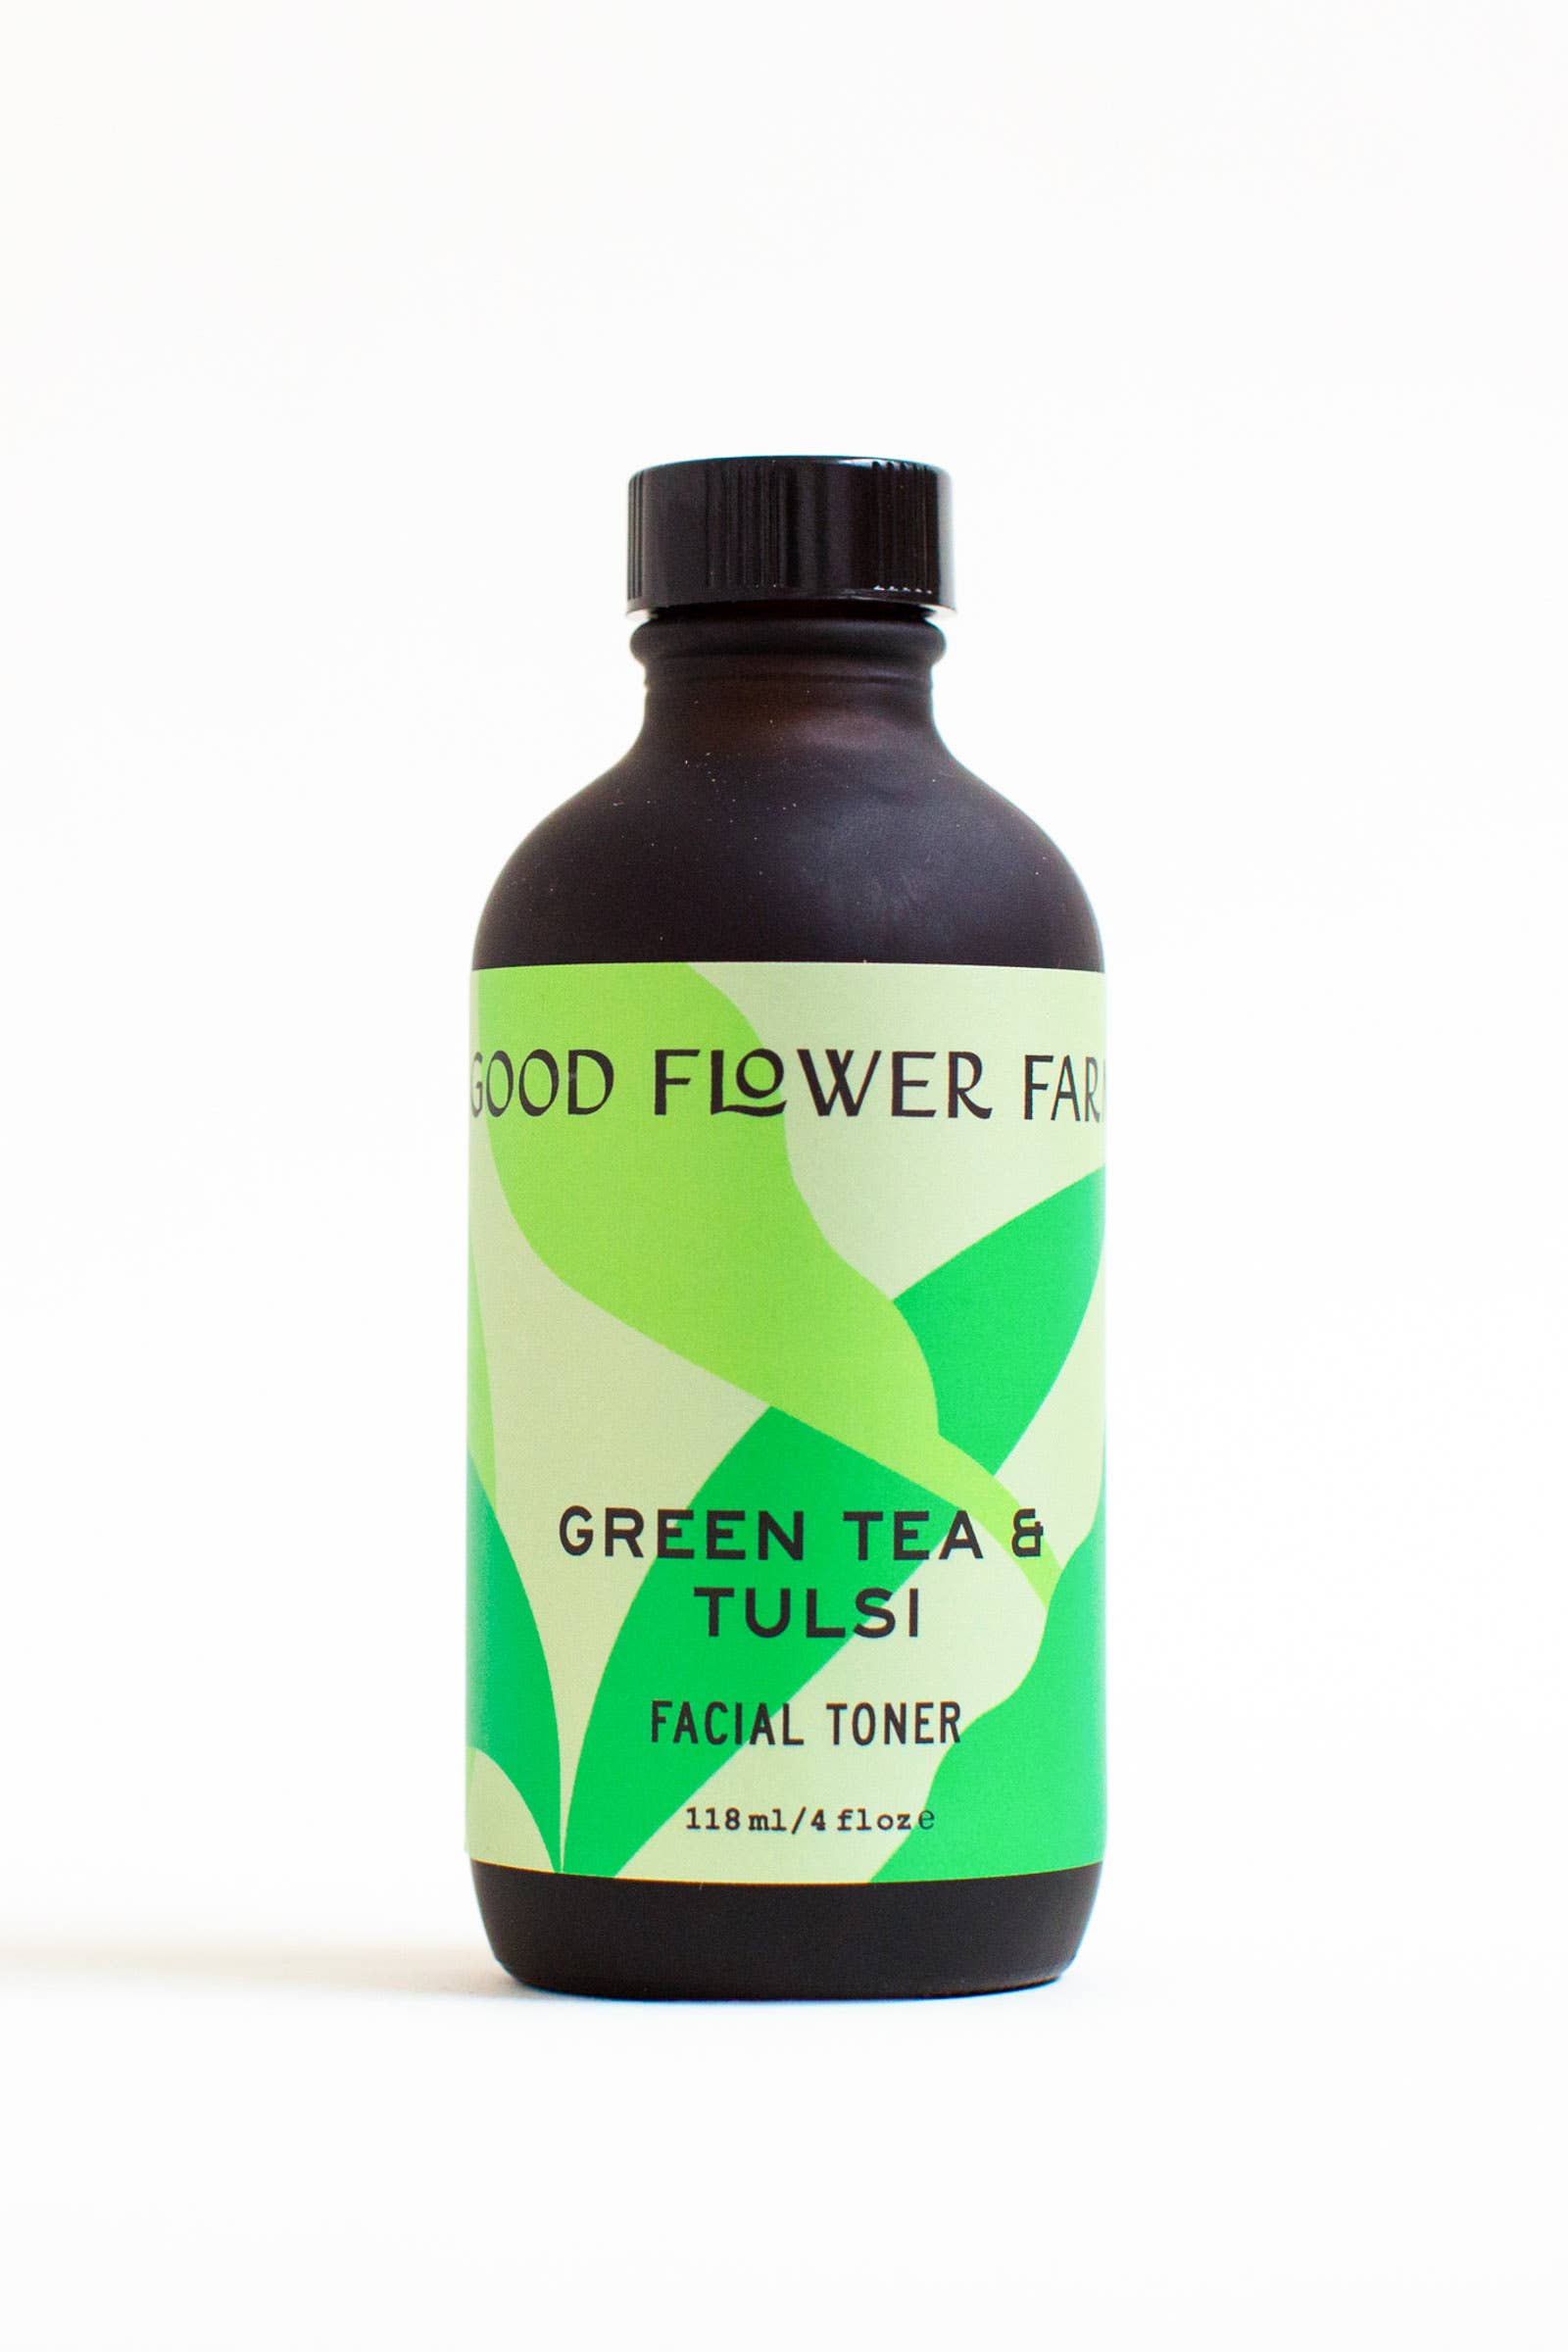 Green Tea & Tulsi Toner | Good Flower Farm